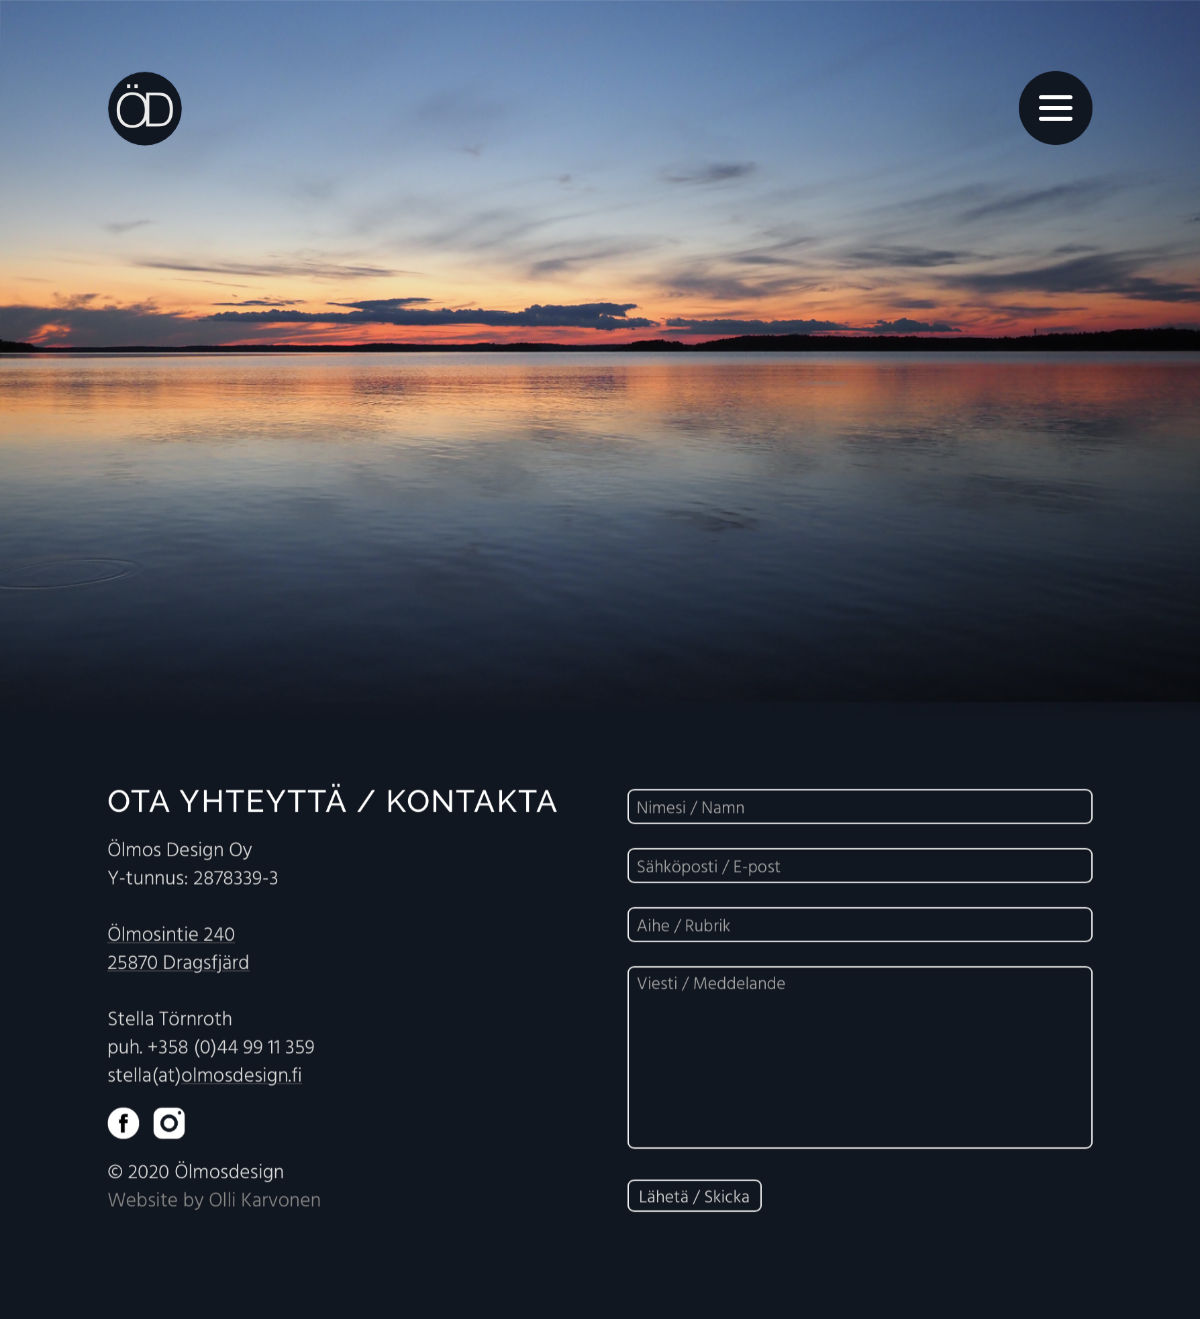 Website/portfolio for Stella Törnroth. Website based on her design. Made by Olli Karvonen.